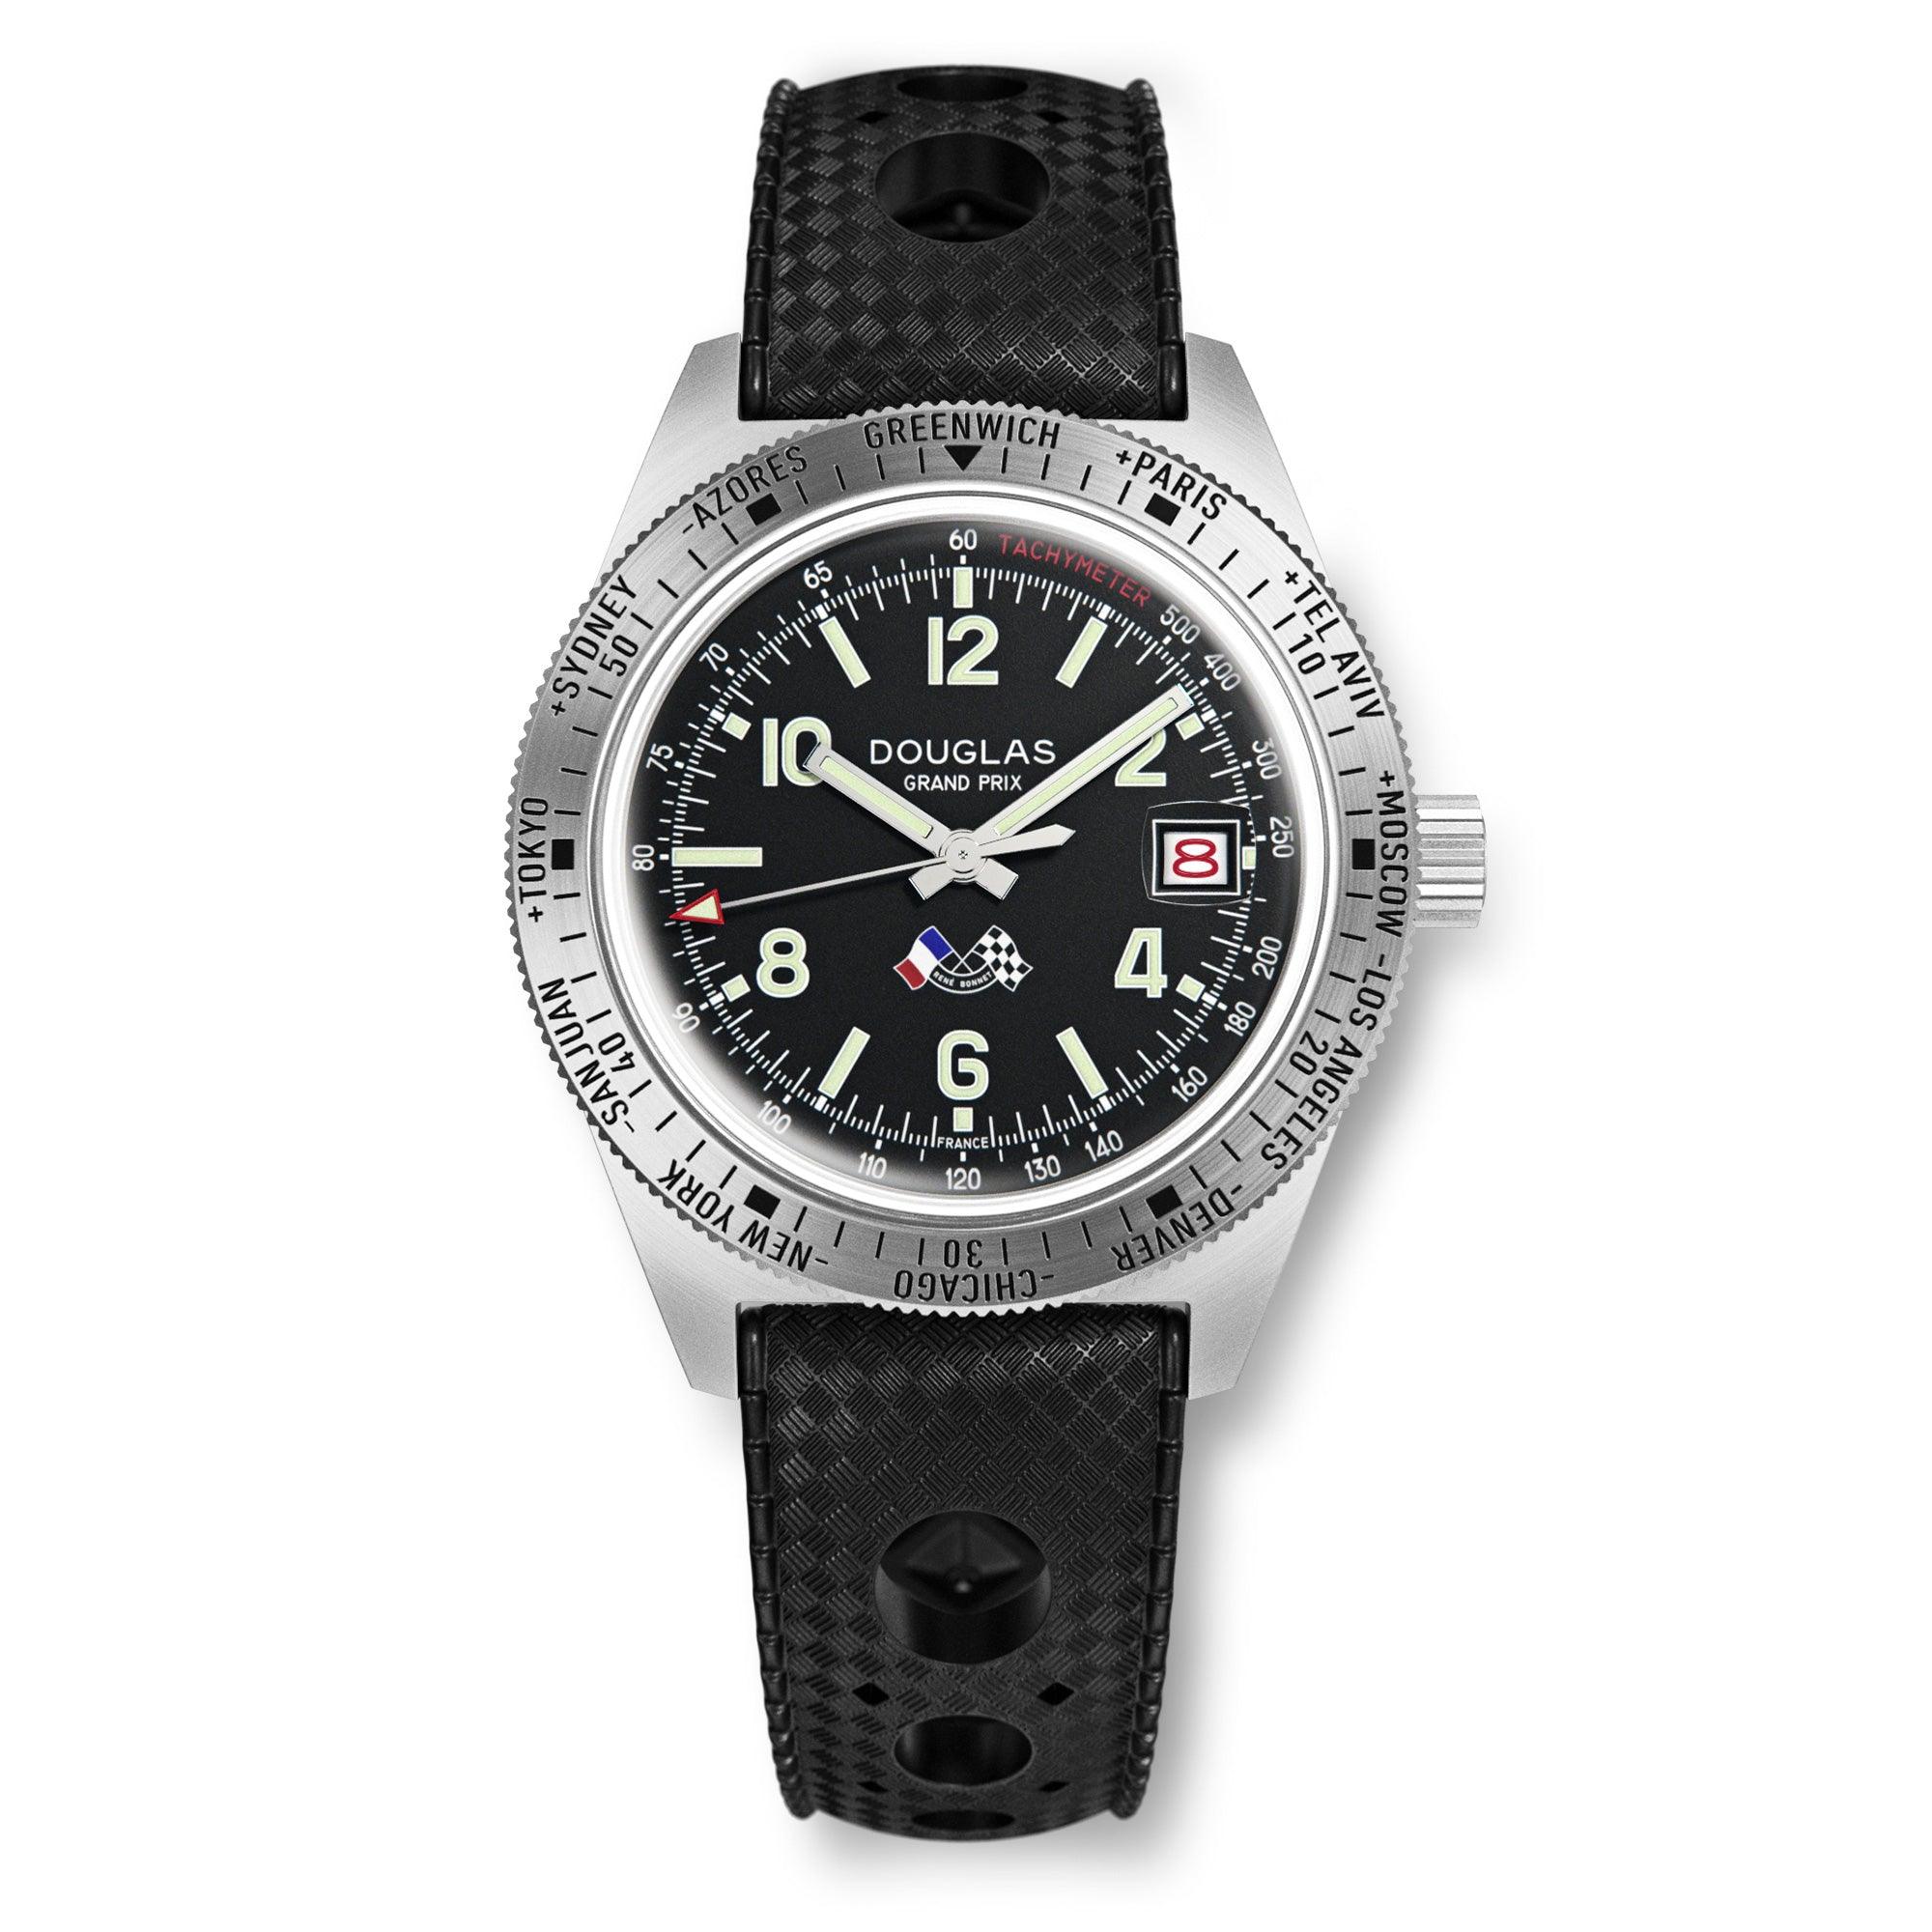 Grand Prix WT Professional Racing Watch - René Bonnet Djet 1962 Limited Edition - Wolbrook Watches